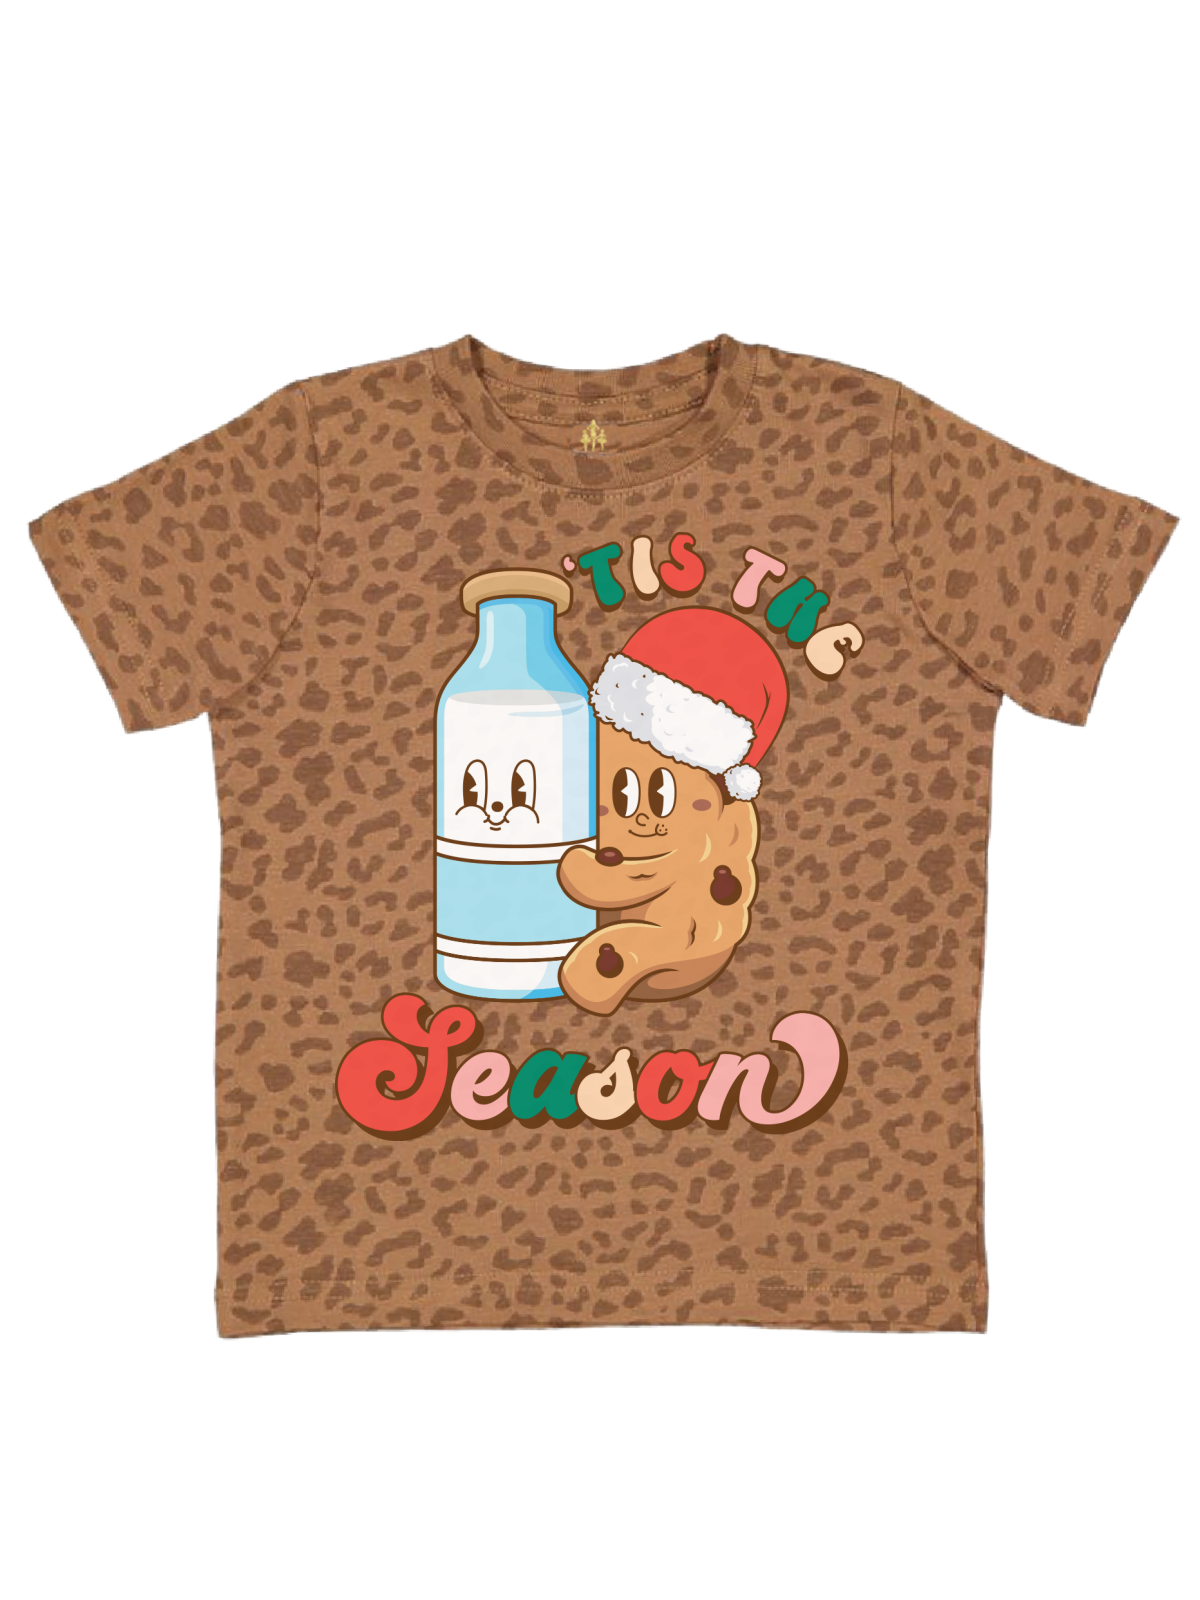 Tis the Season Kids Milk and Cookies Christmas Shirt - Leopard Print